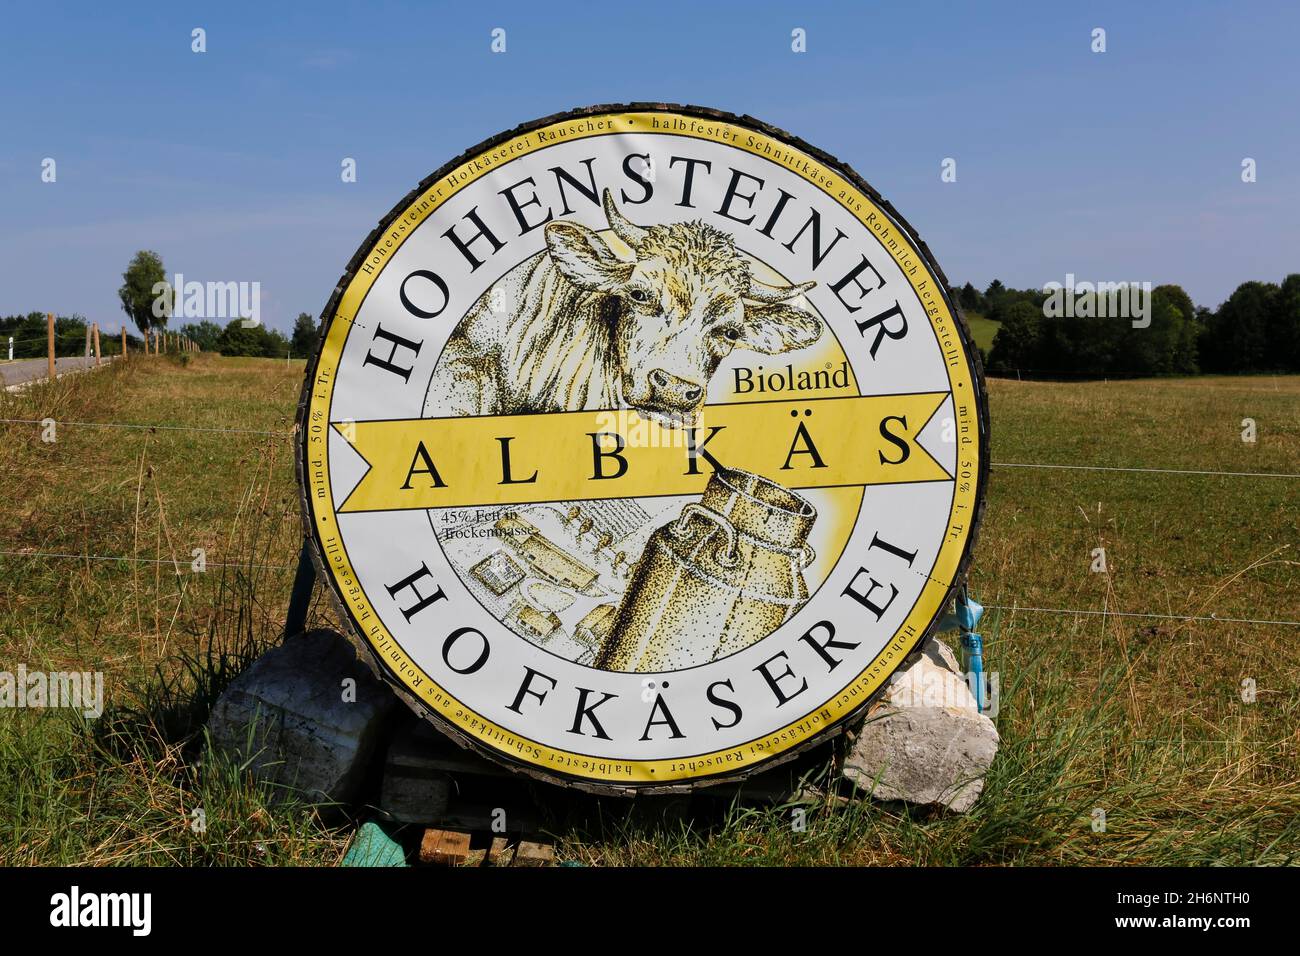 Germany Alamy Oedenwaldstetten, Stock Sign, in the of Albkaese, Hofkaeserei Baden-Wuerttemberg, Photo - Bioland advertising Hohensteiner